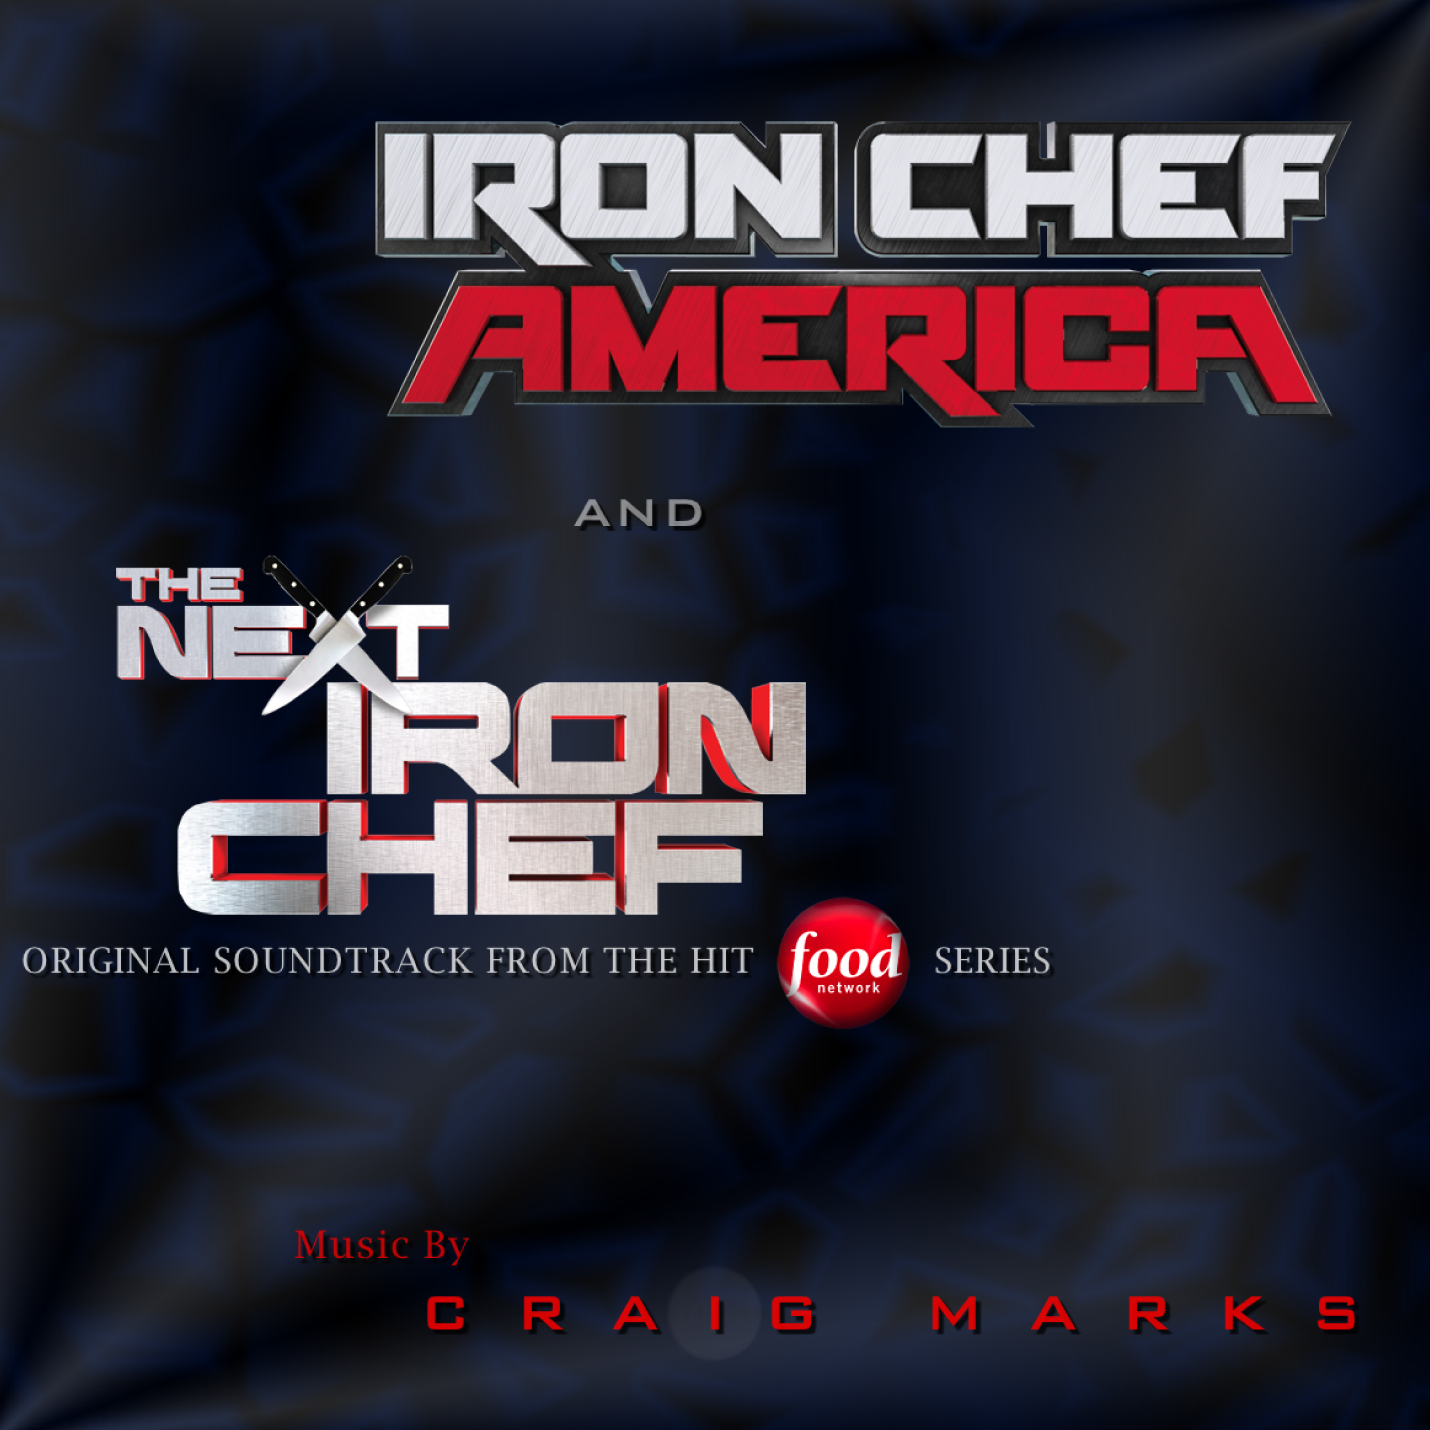 Iron Chef Cyber Planet игра 2006 музыка.